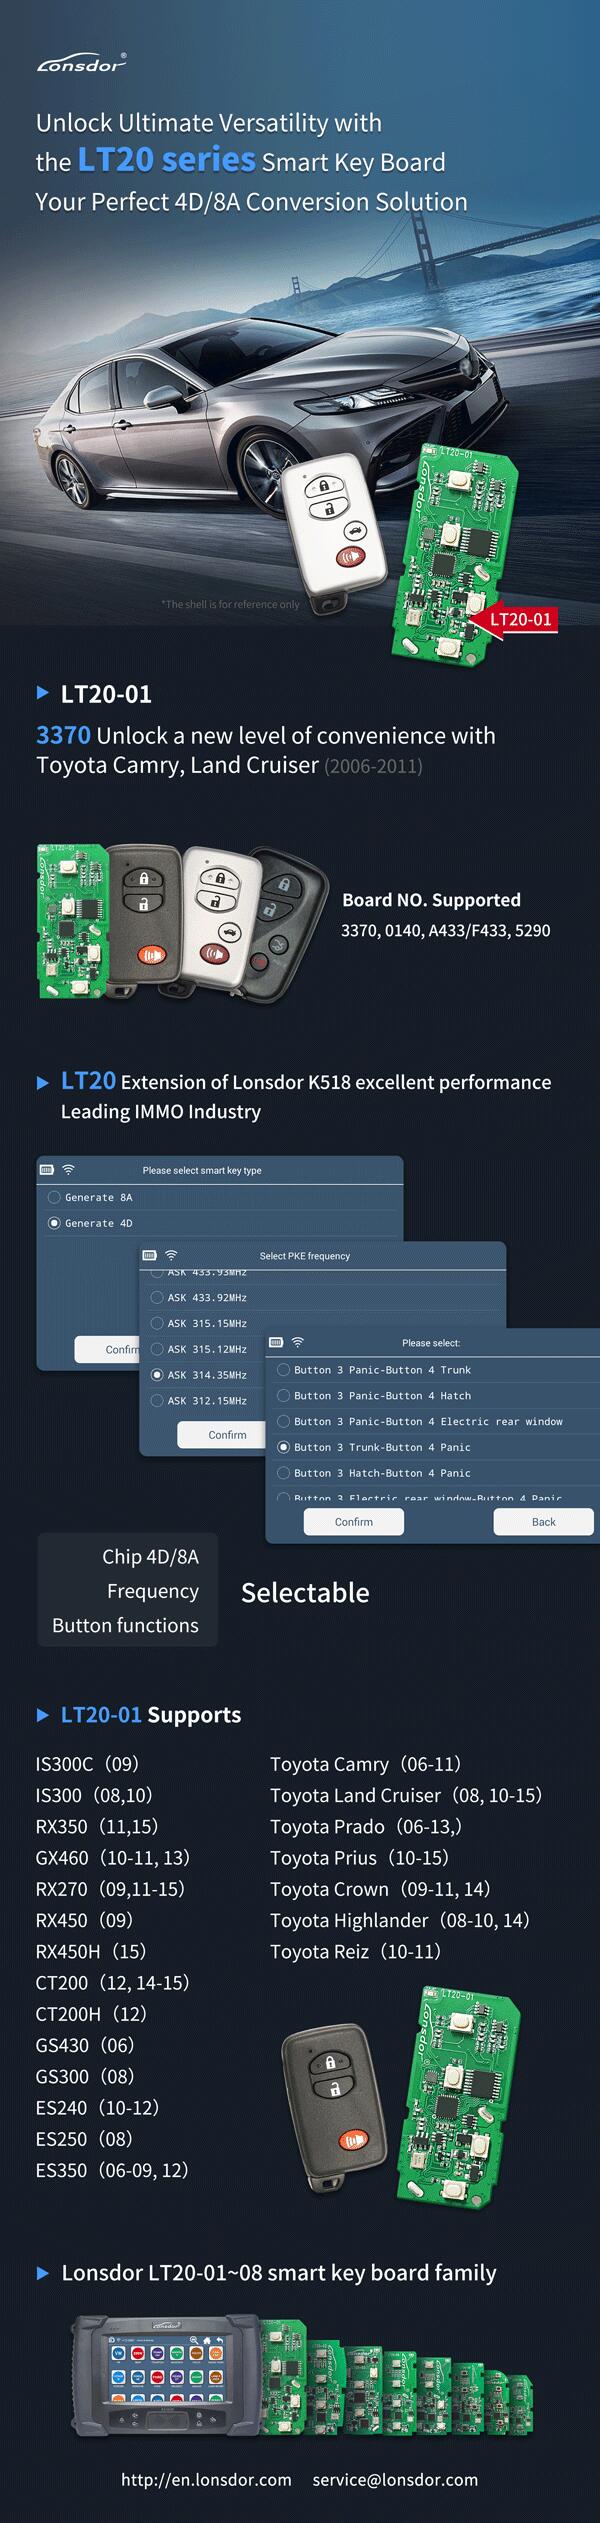 lonsdor-lt20-01-8a-4d-toyota-lexus-smart-key